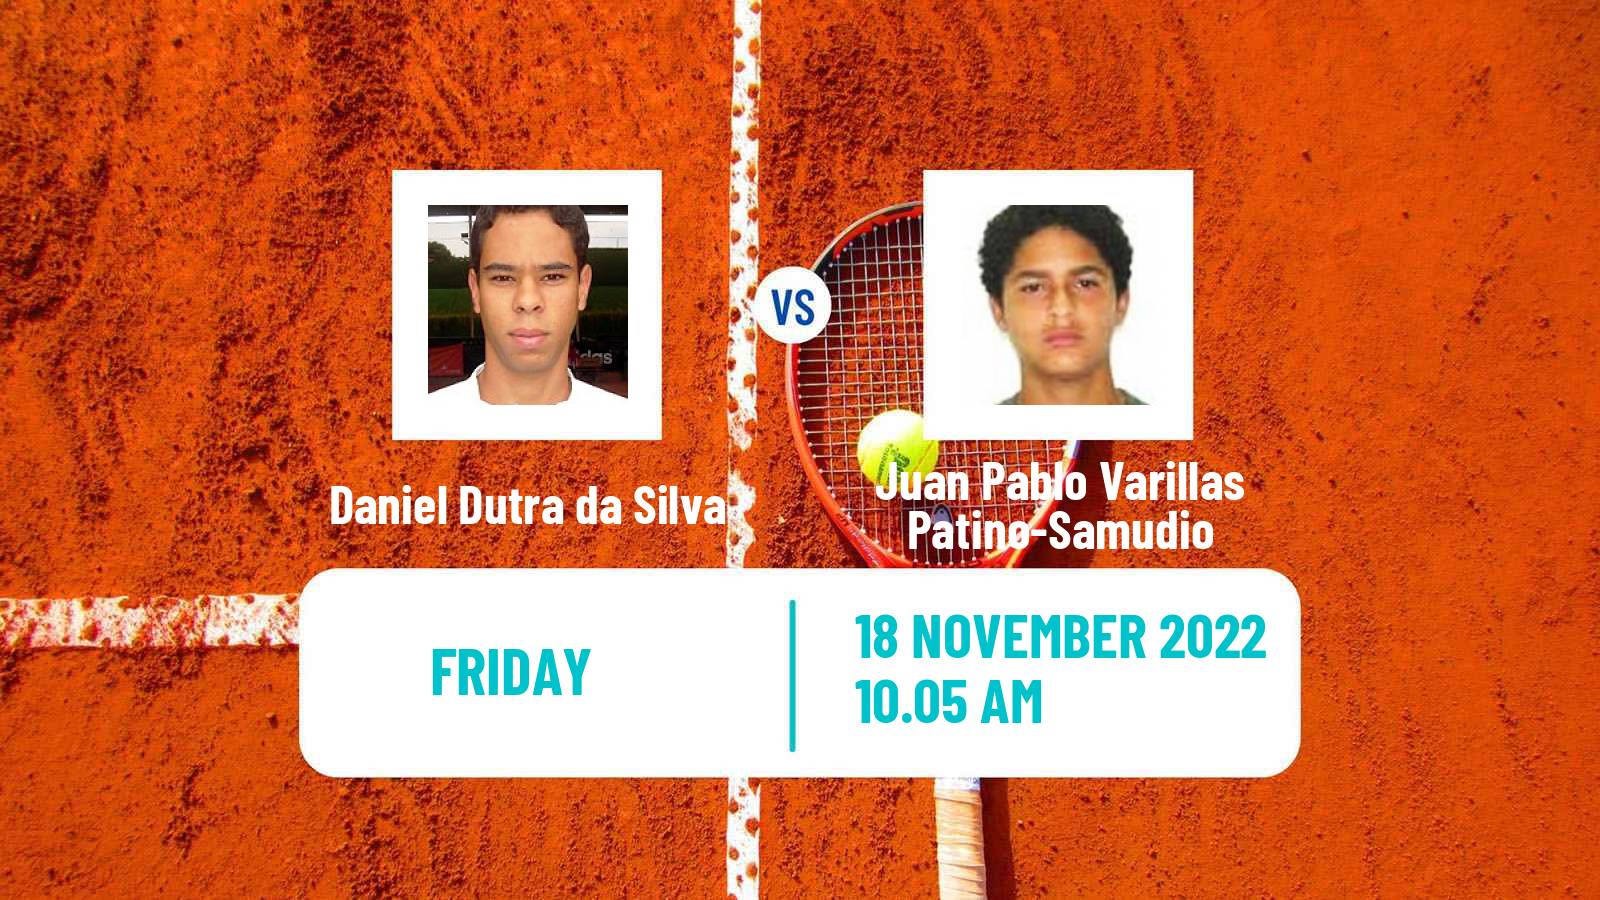 Tennis ATP Challenger Daniel Dutra da Silva - Juan Pablo Varillas Patino-Samudio